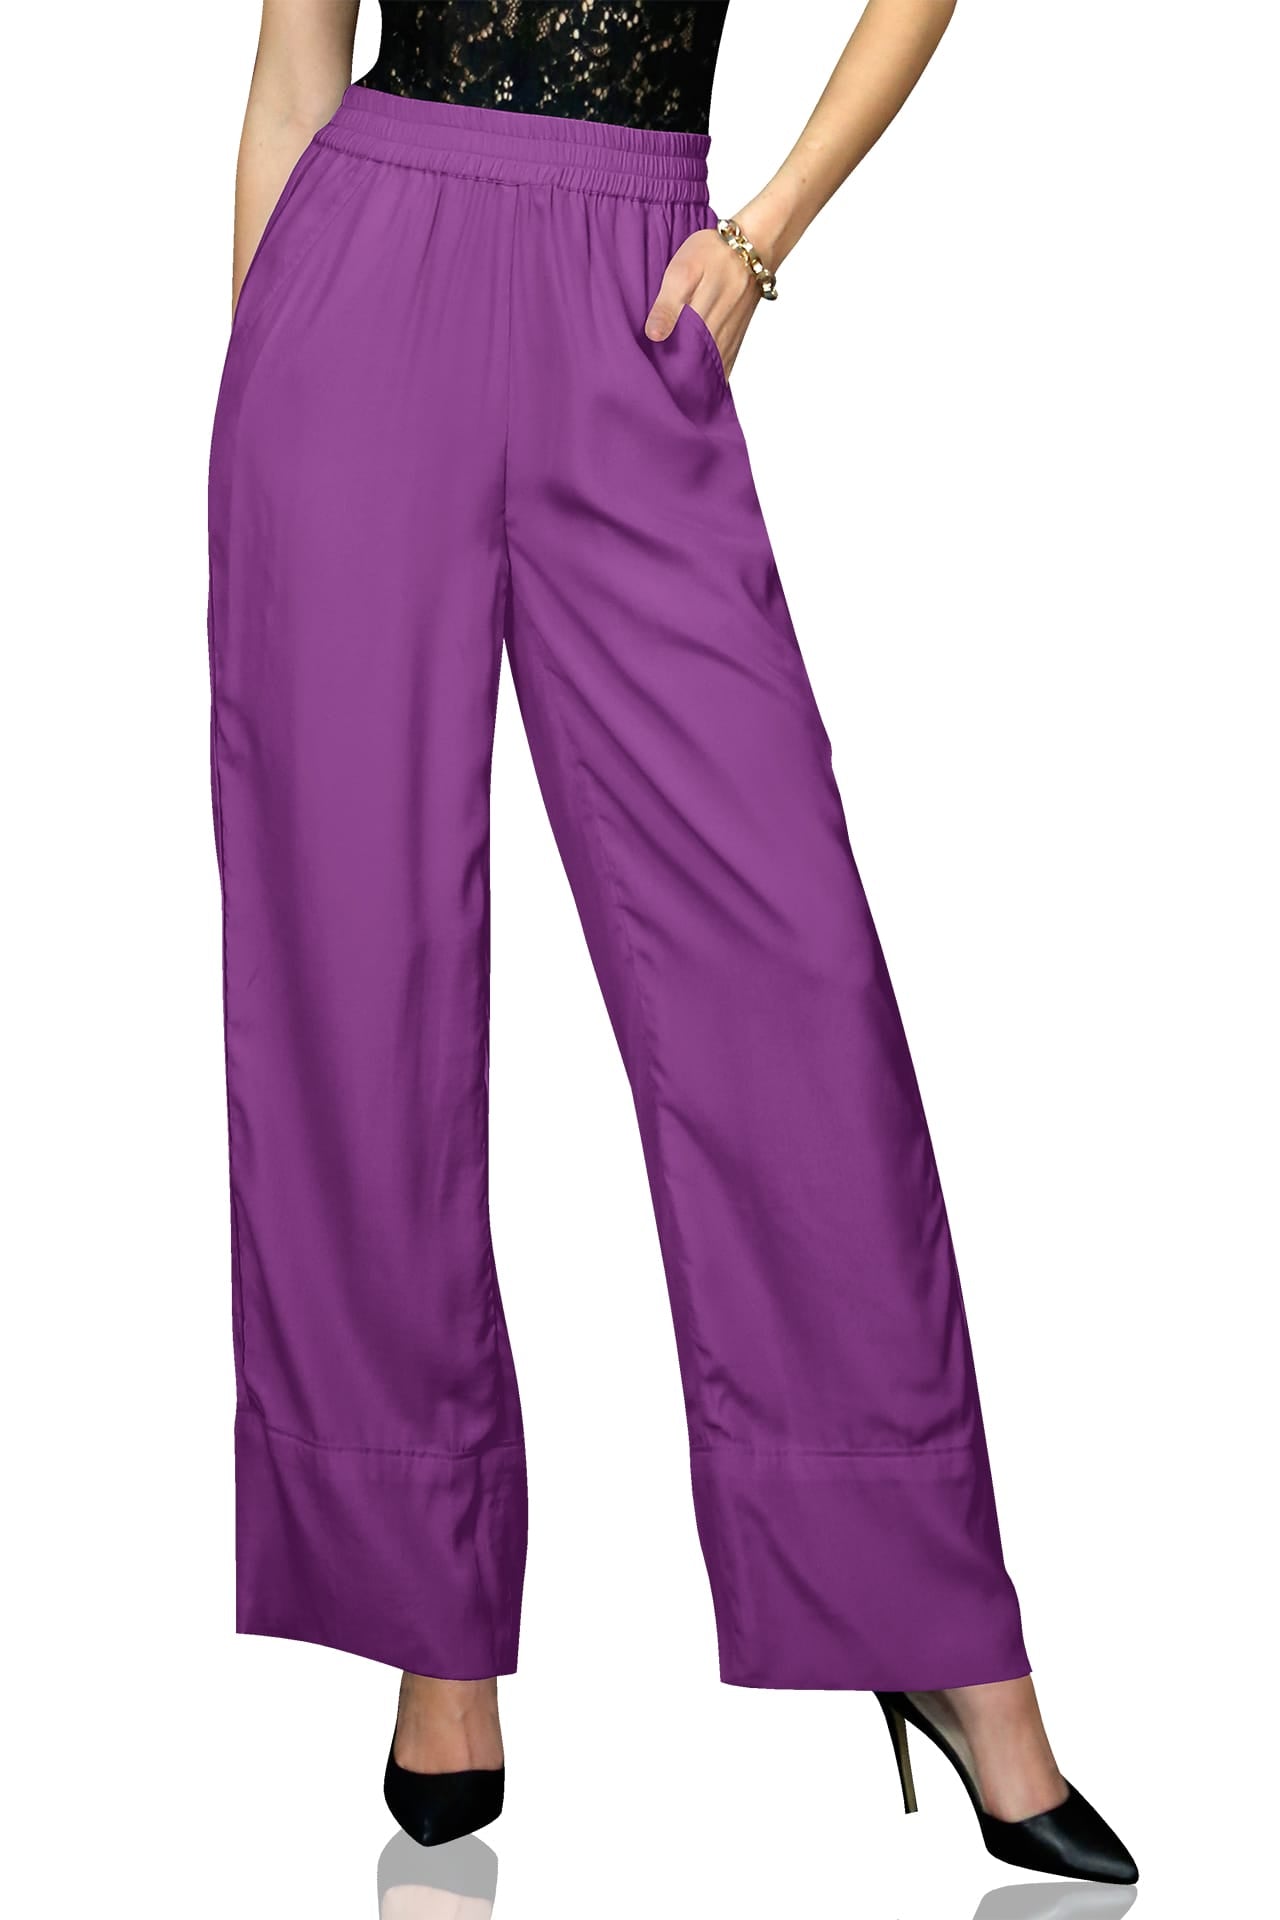 "Kyle X Shahida" "dark purple pants" "plazzo pant for women" "straight pants for women"